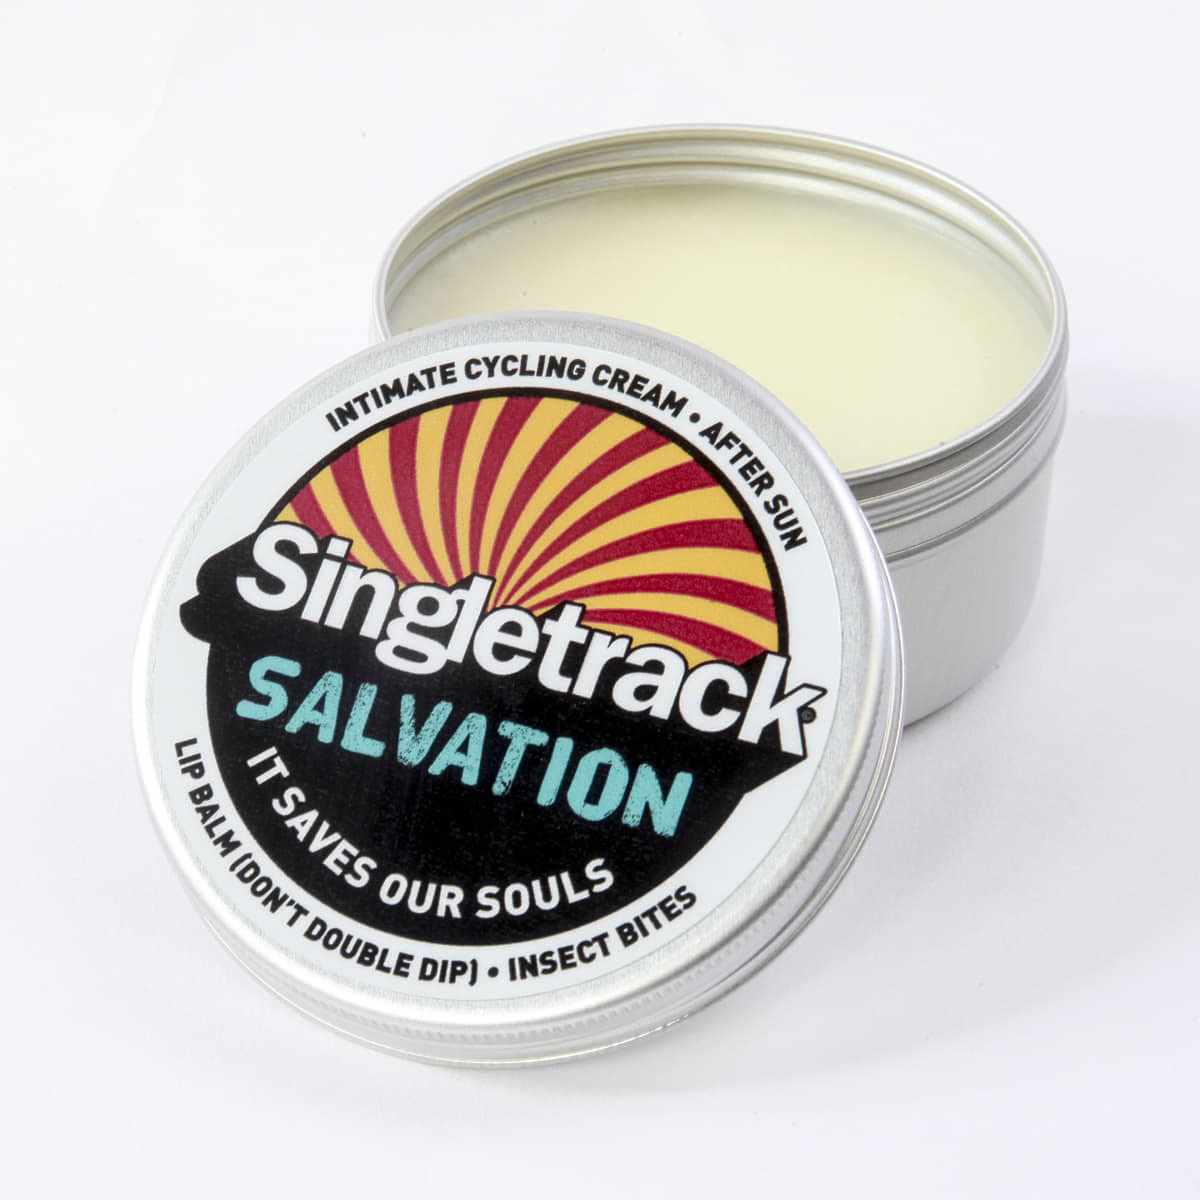 Singletrack Salvation – Intimate Cycling Chamois Cream